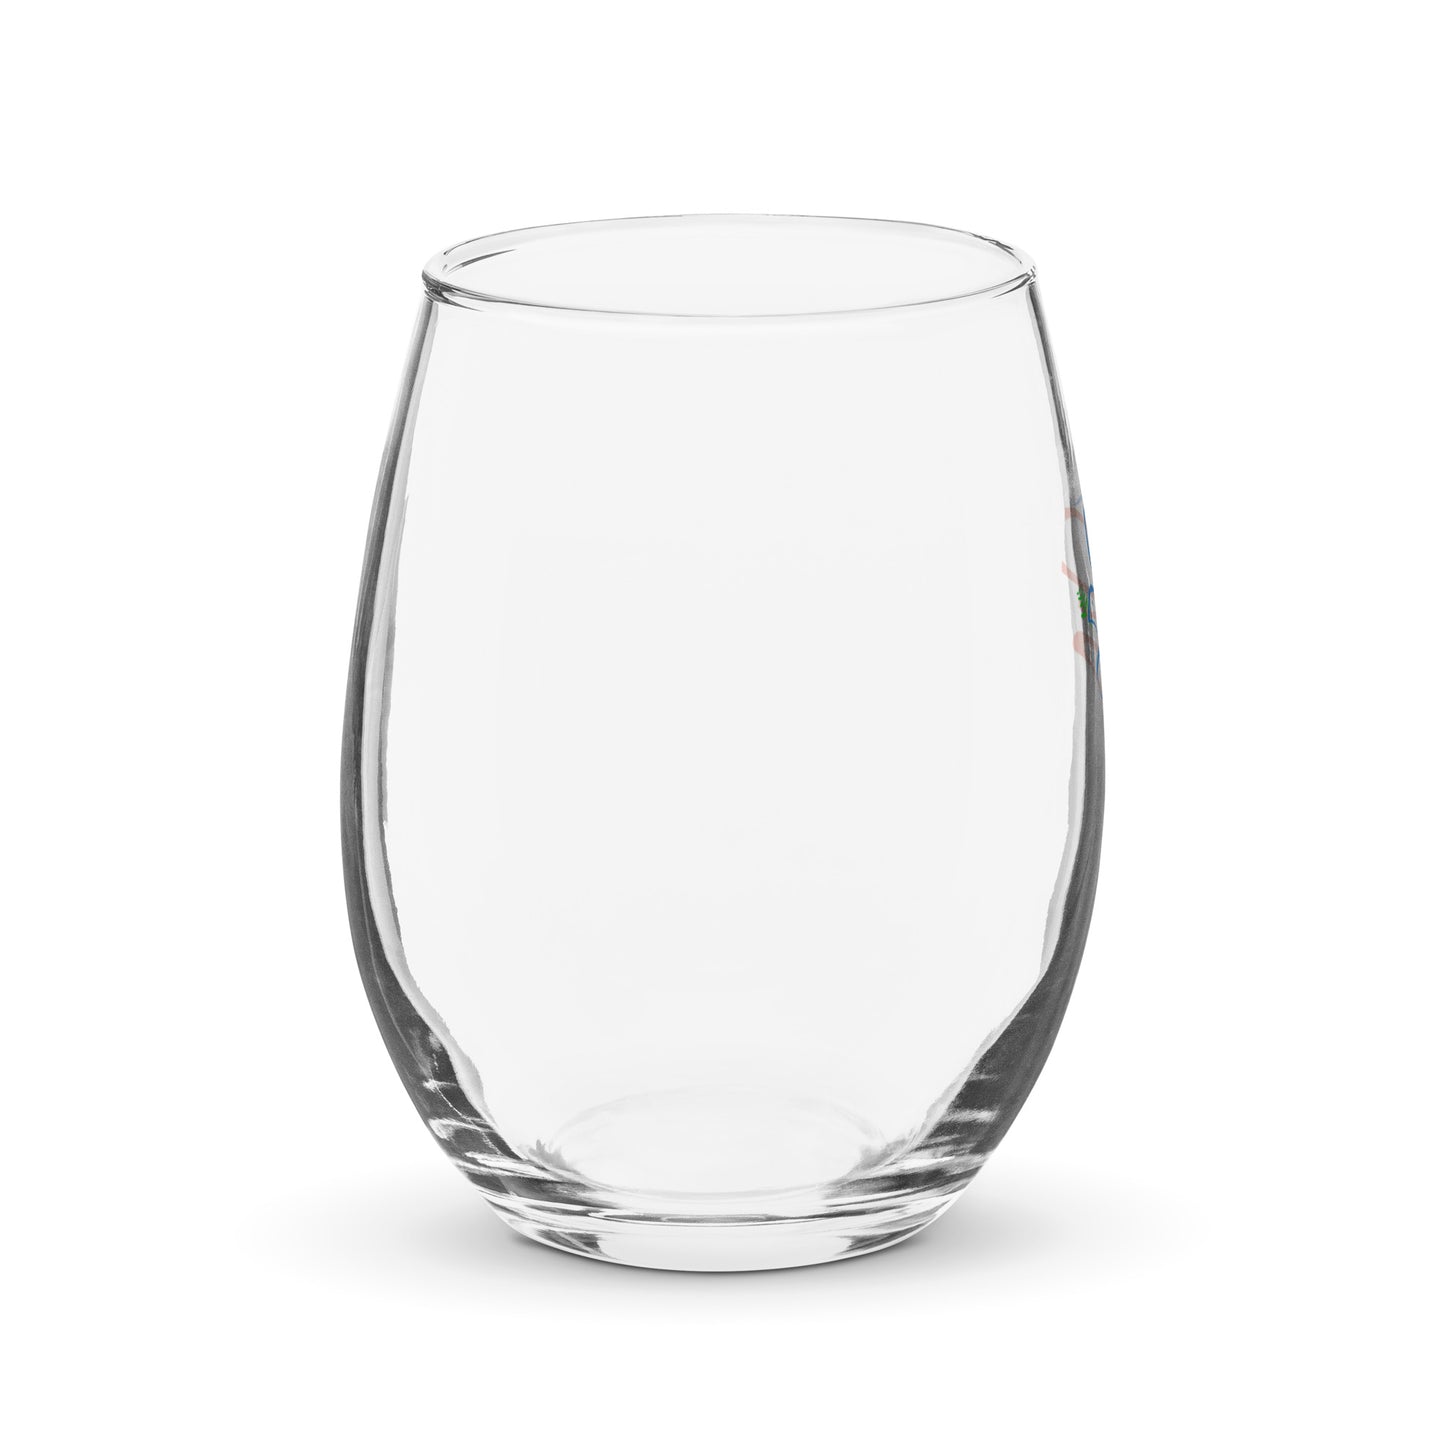 Stemless wine glass with Cabela and Schmitt logo